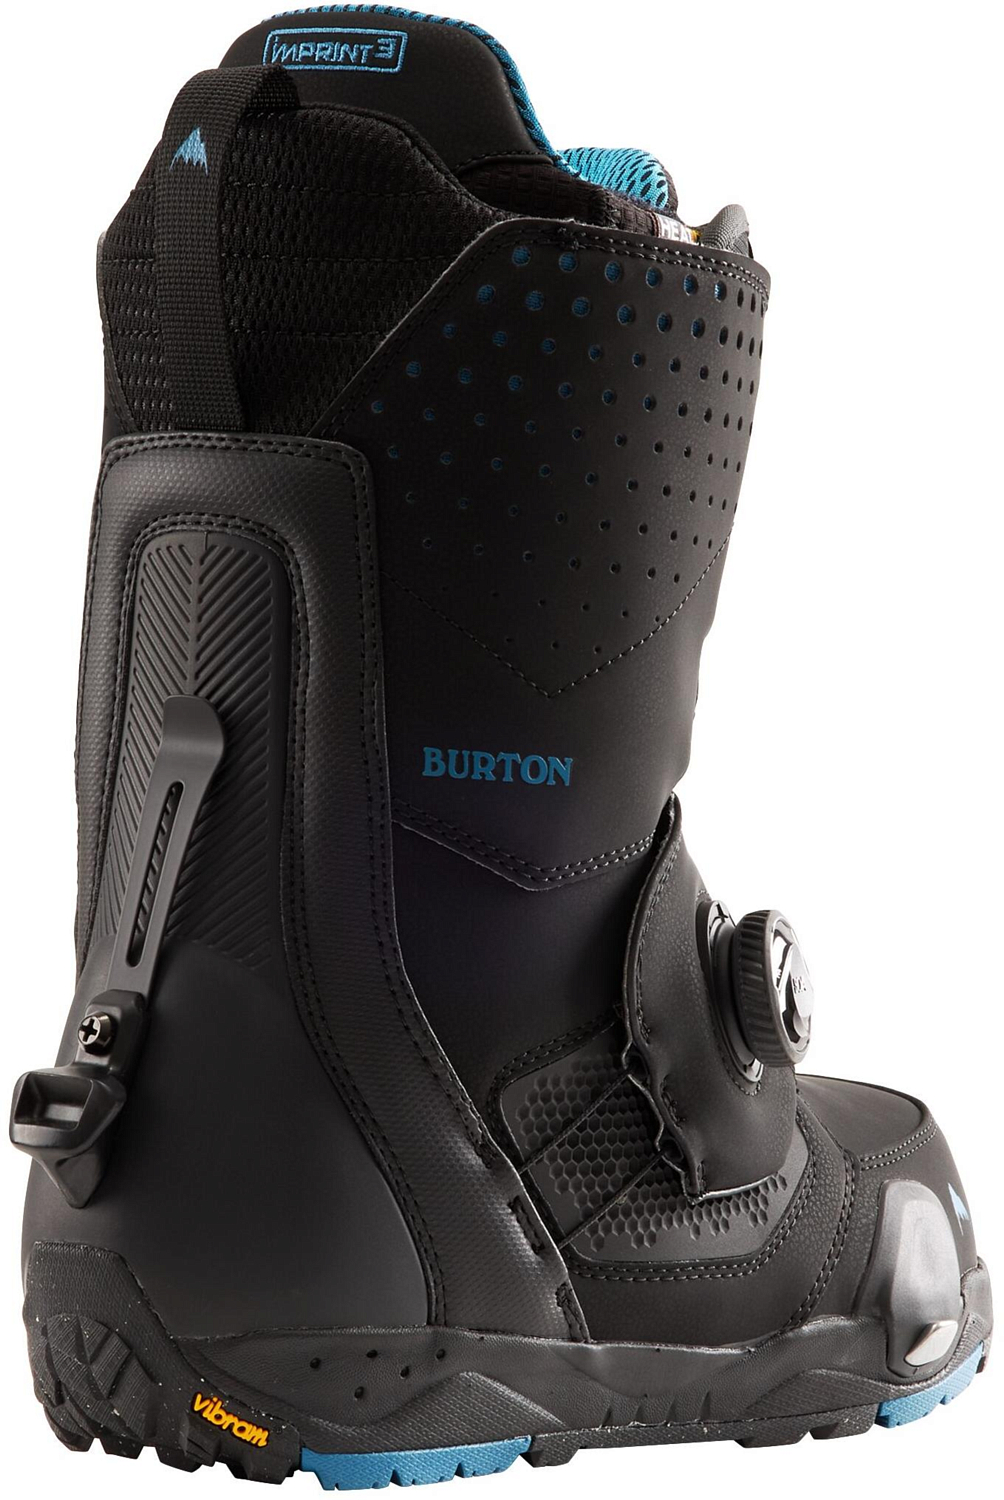 Ботинки для сноуборда BURTON 2021-22 Photon Step On Black